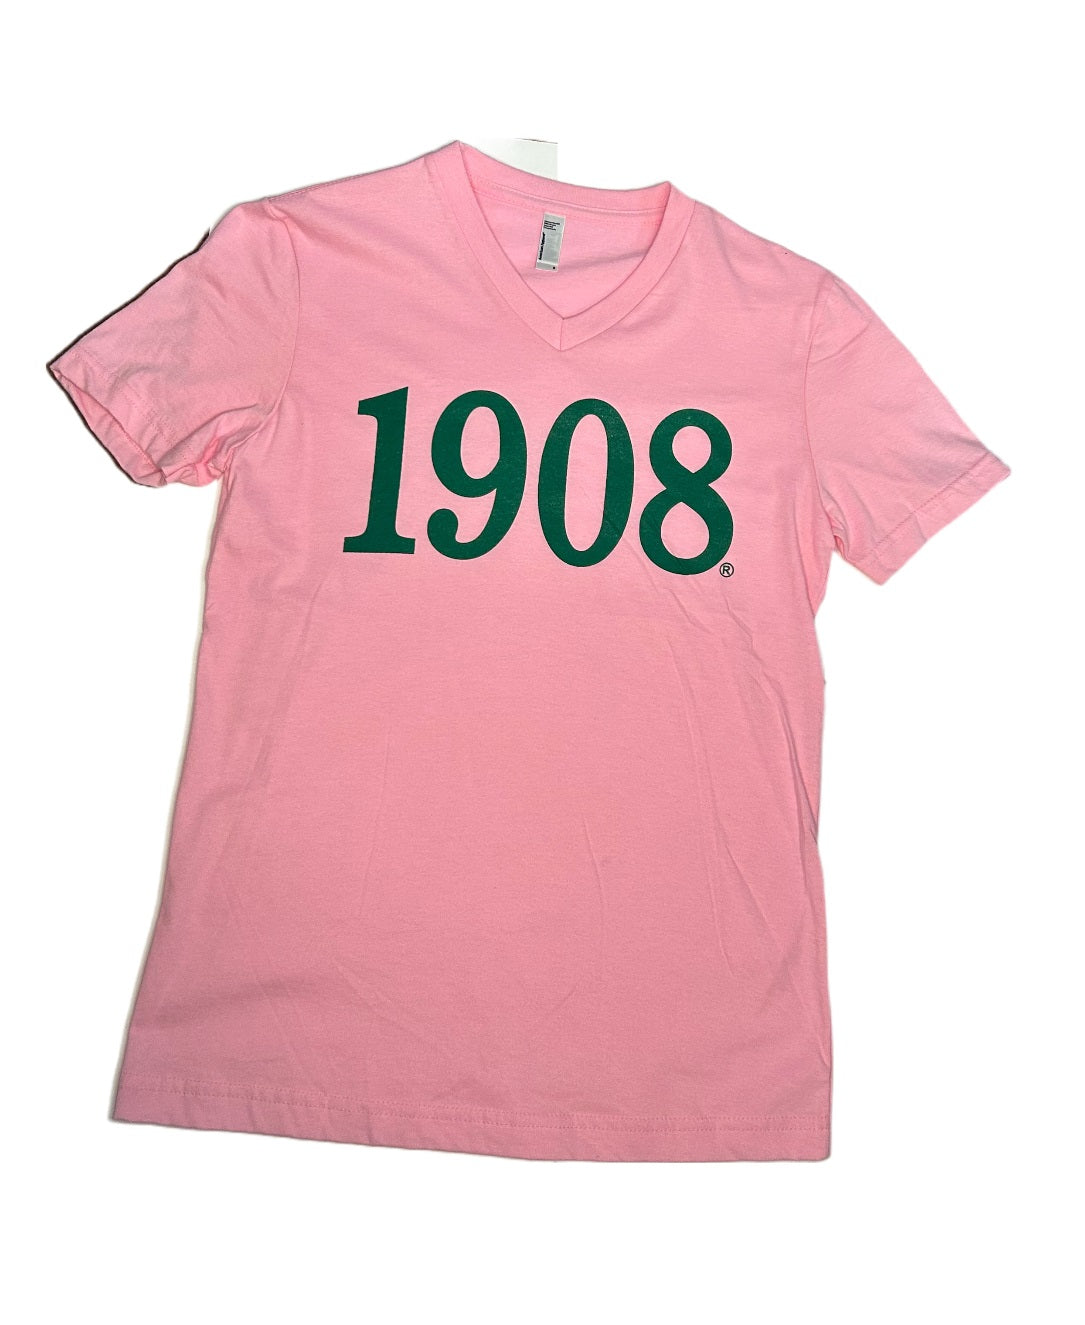 AKA T-Shirt - 1908, Pink